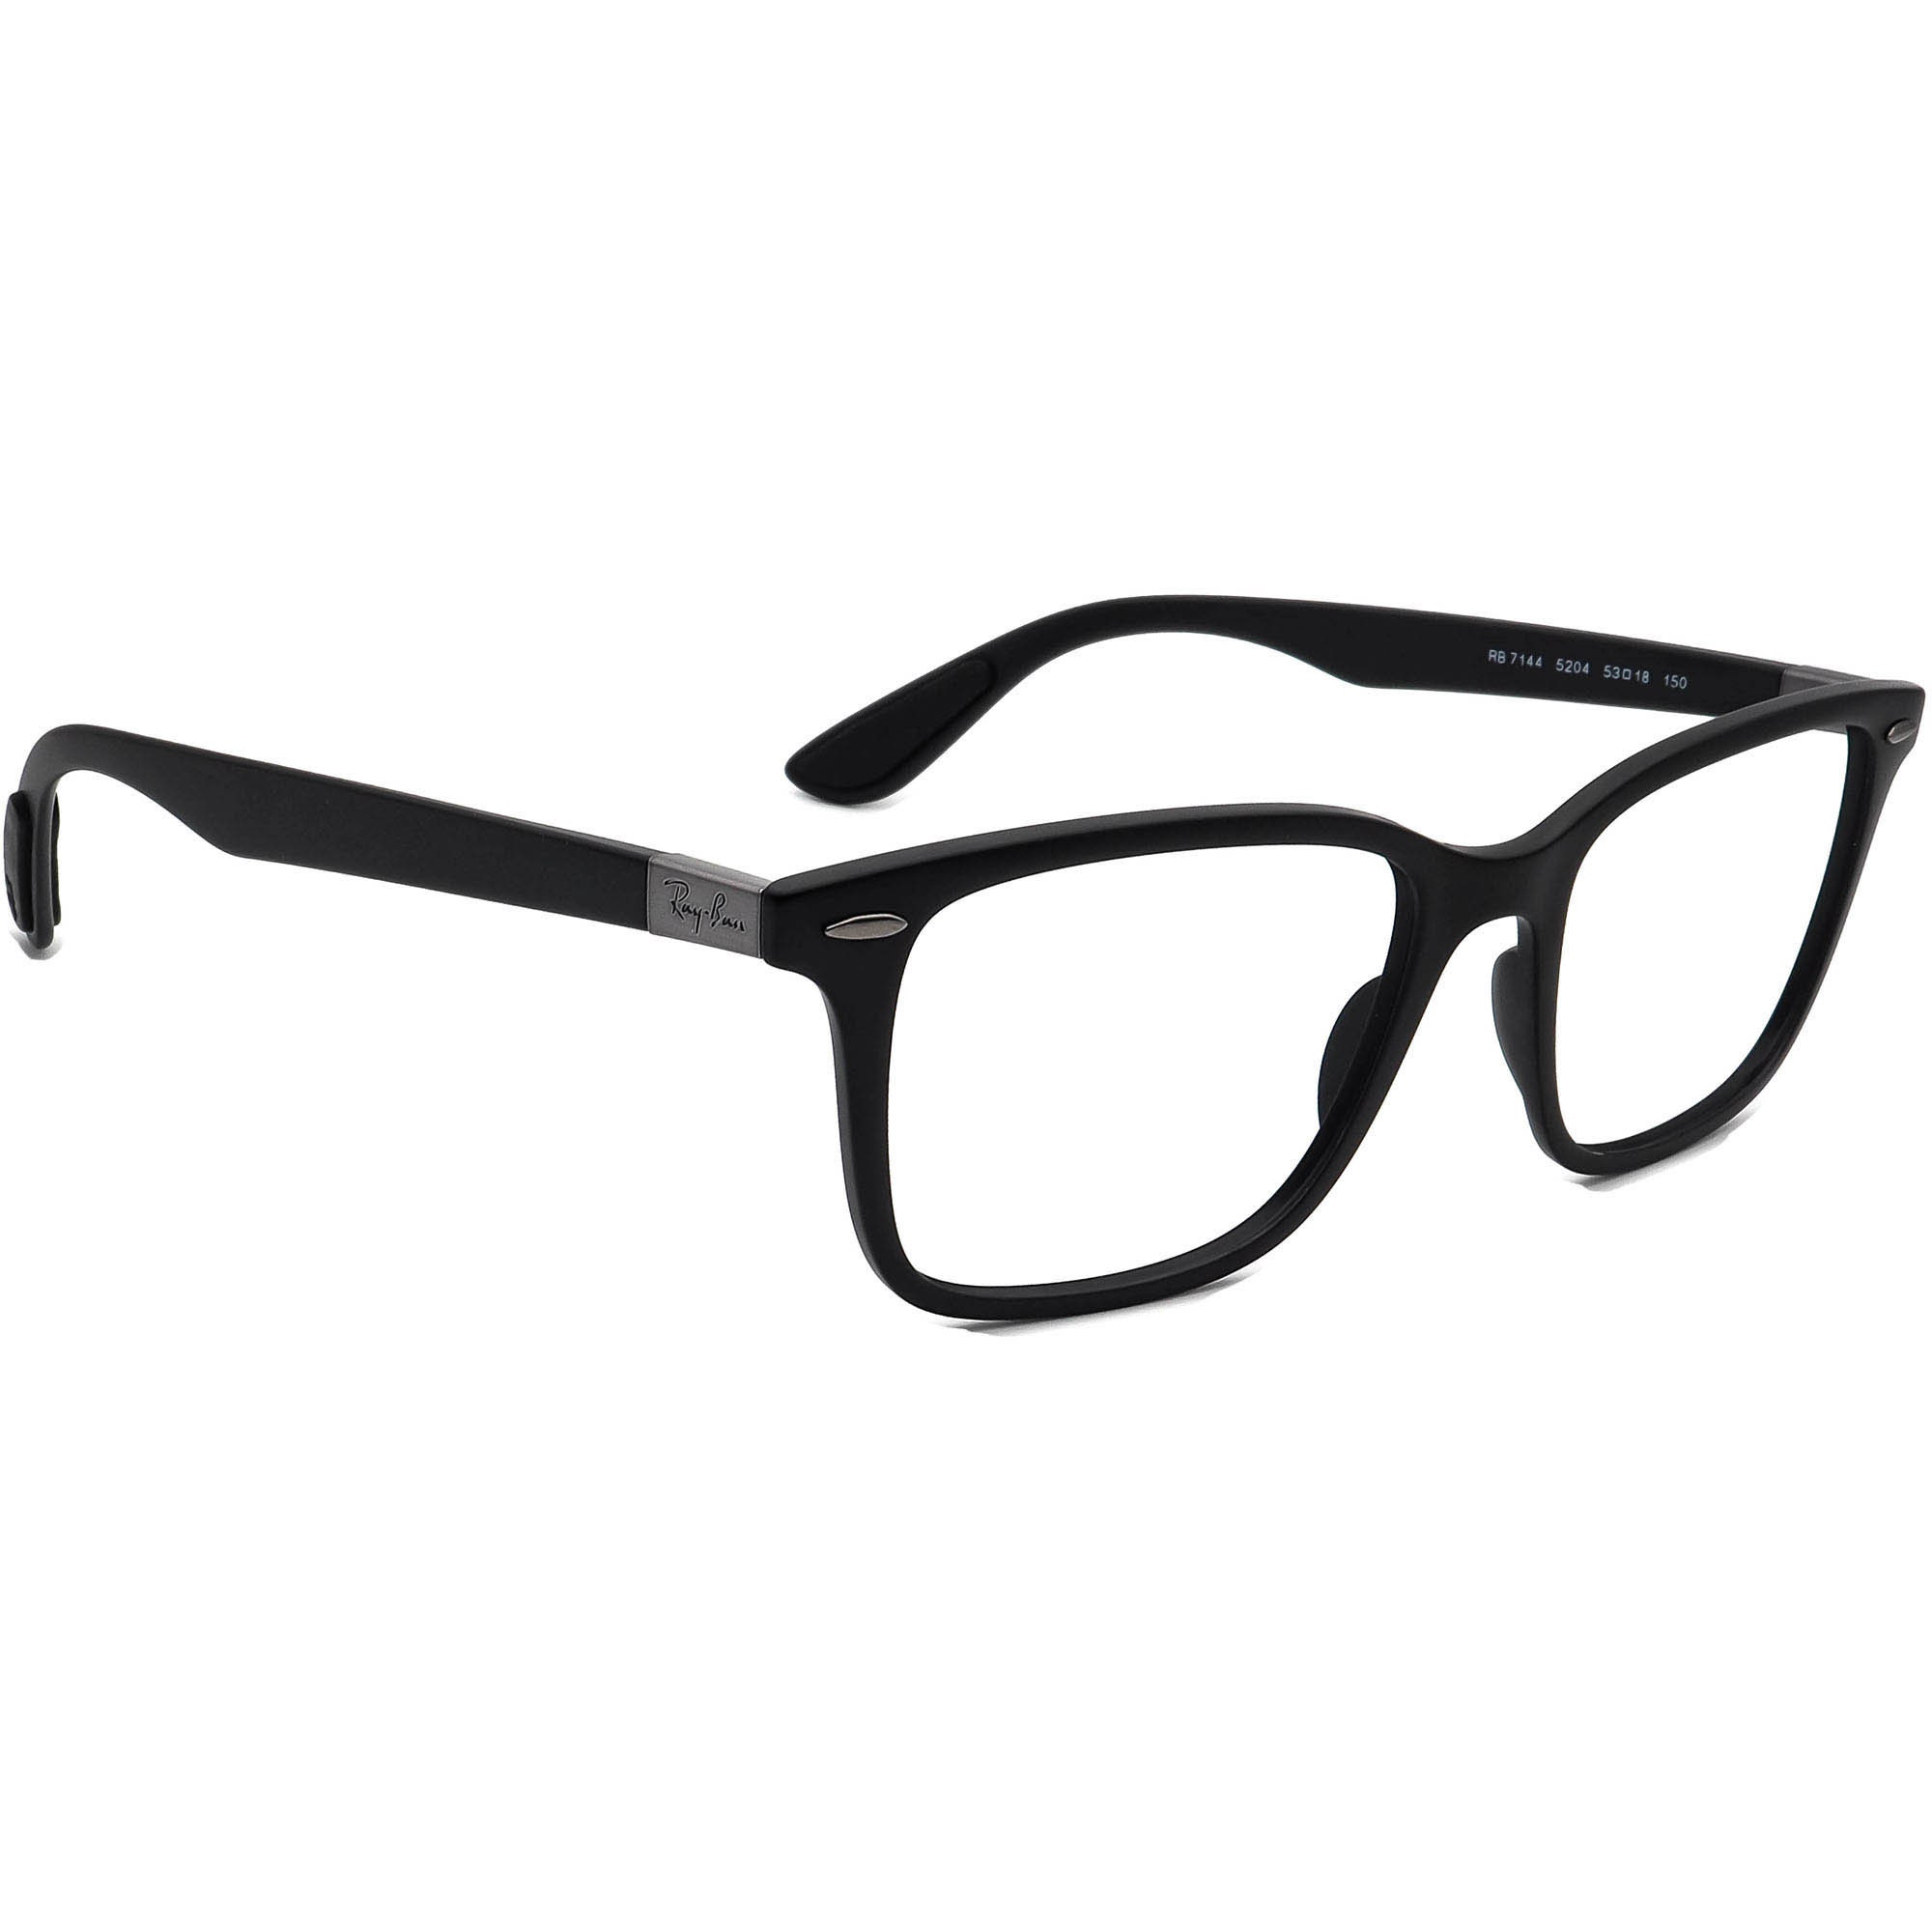 Ray-Ban Eyeglasses RB 7144 5204 Liteforce Matte Black Frame | Etsy